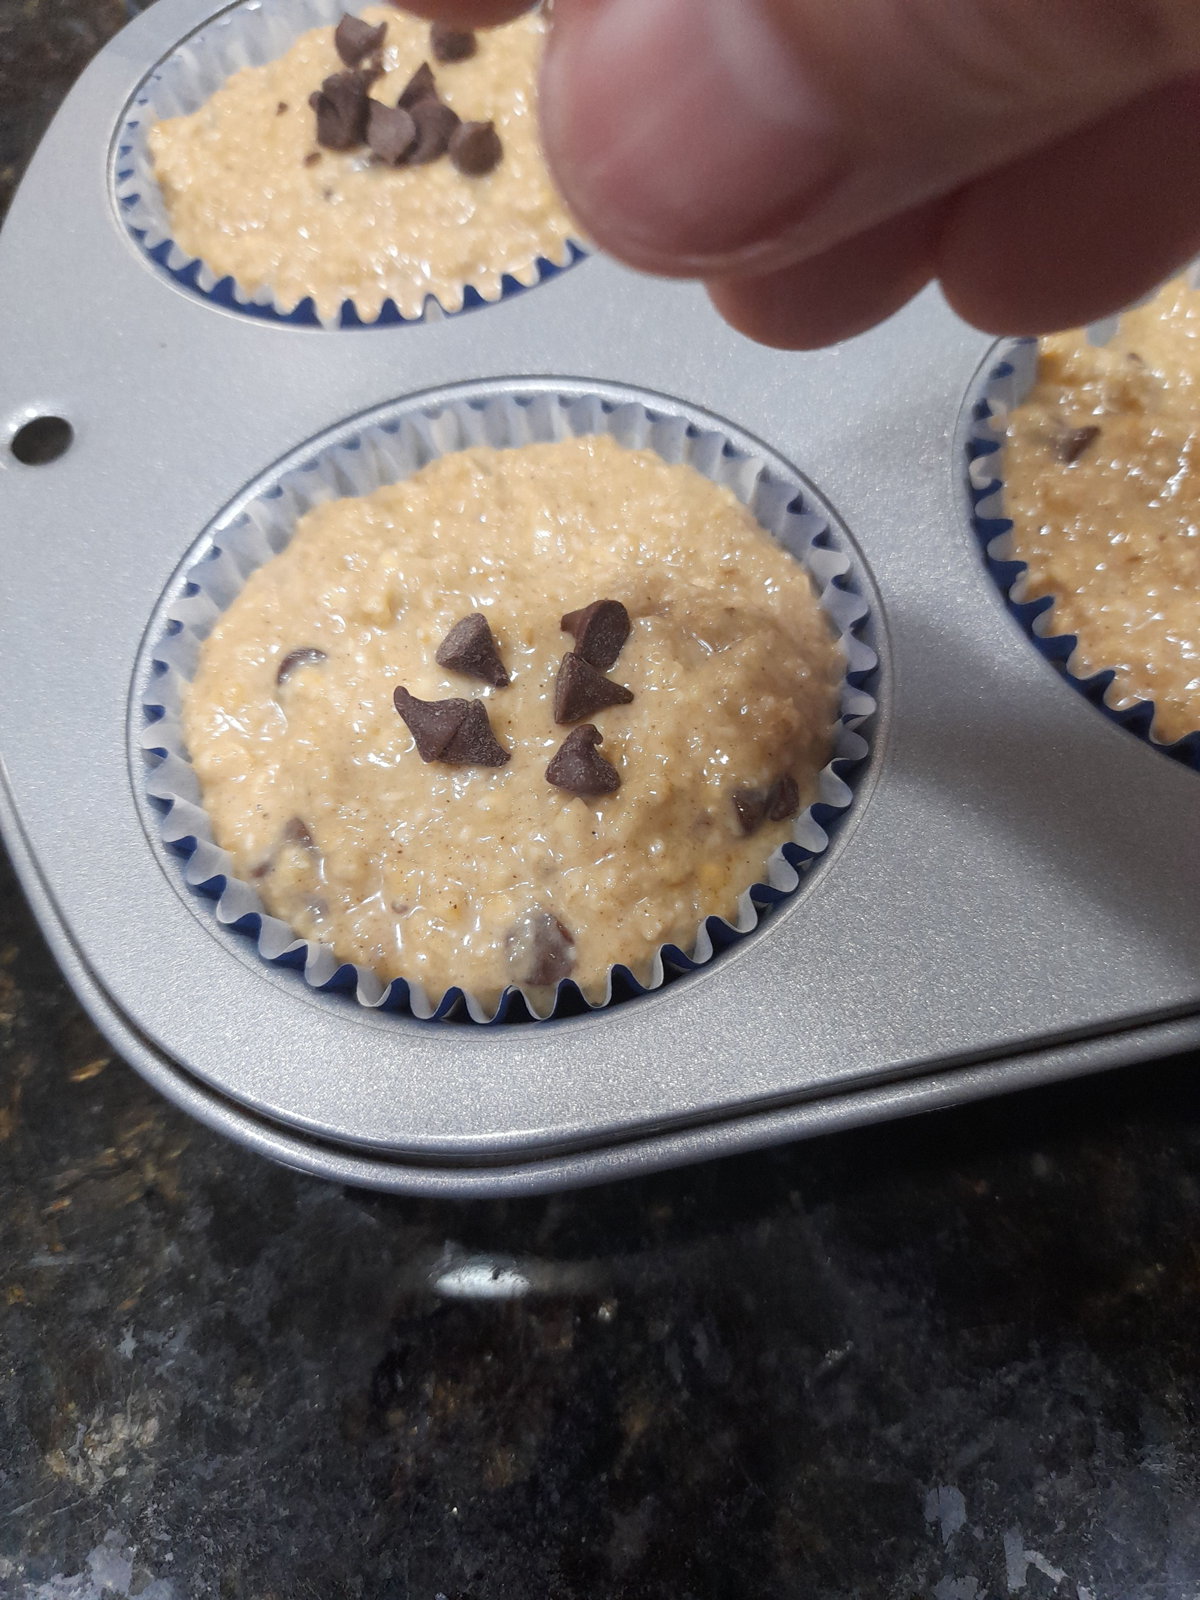 Muffins con chispas de chocolate semi amargo